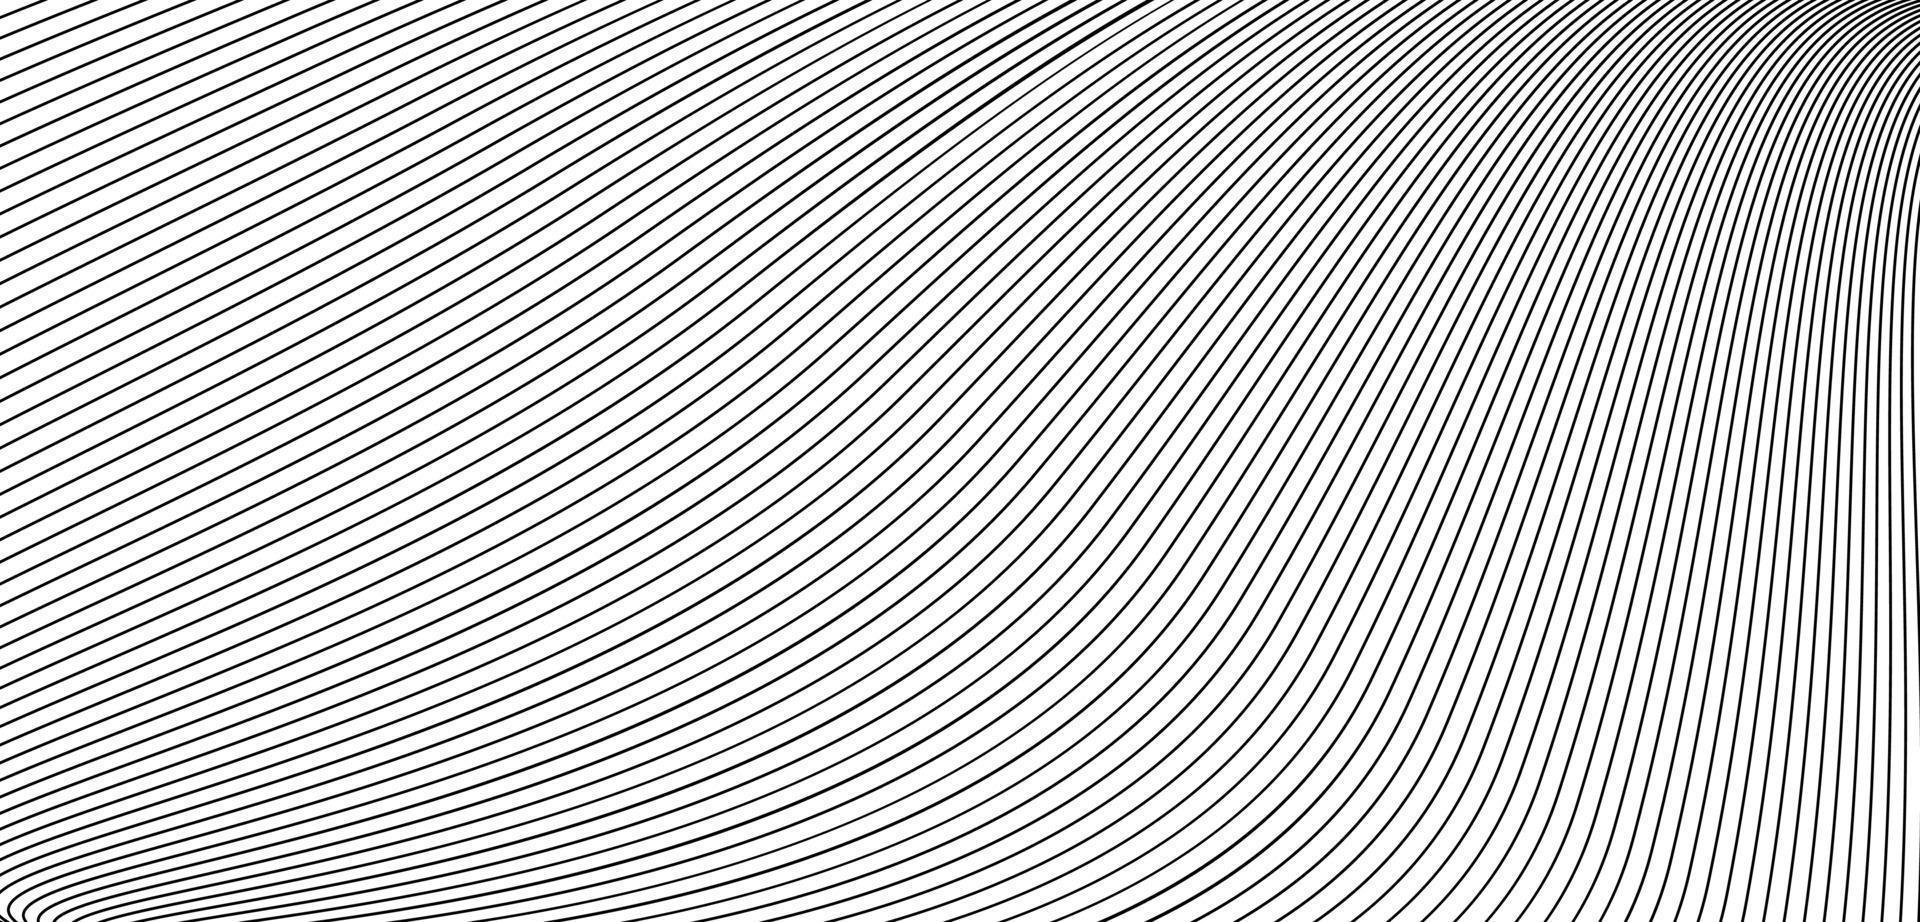 striped texture. Line design. spiral abstract background design vector